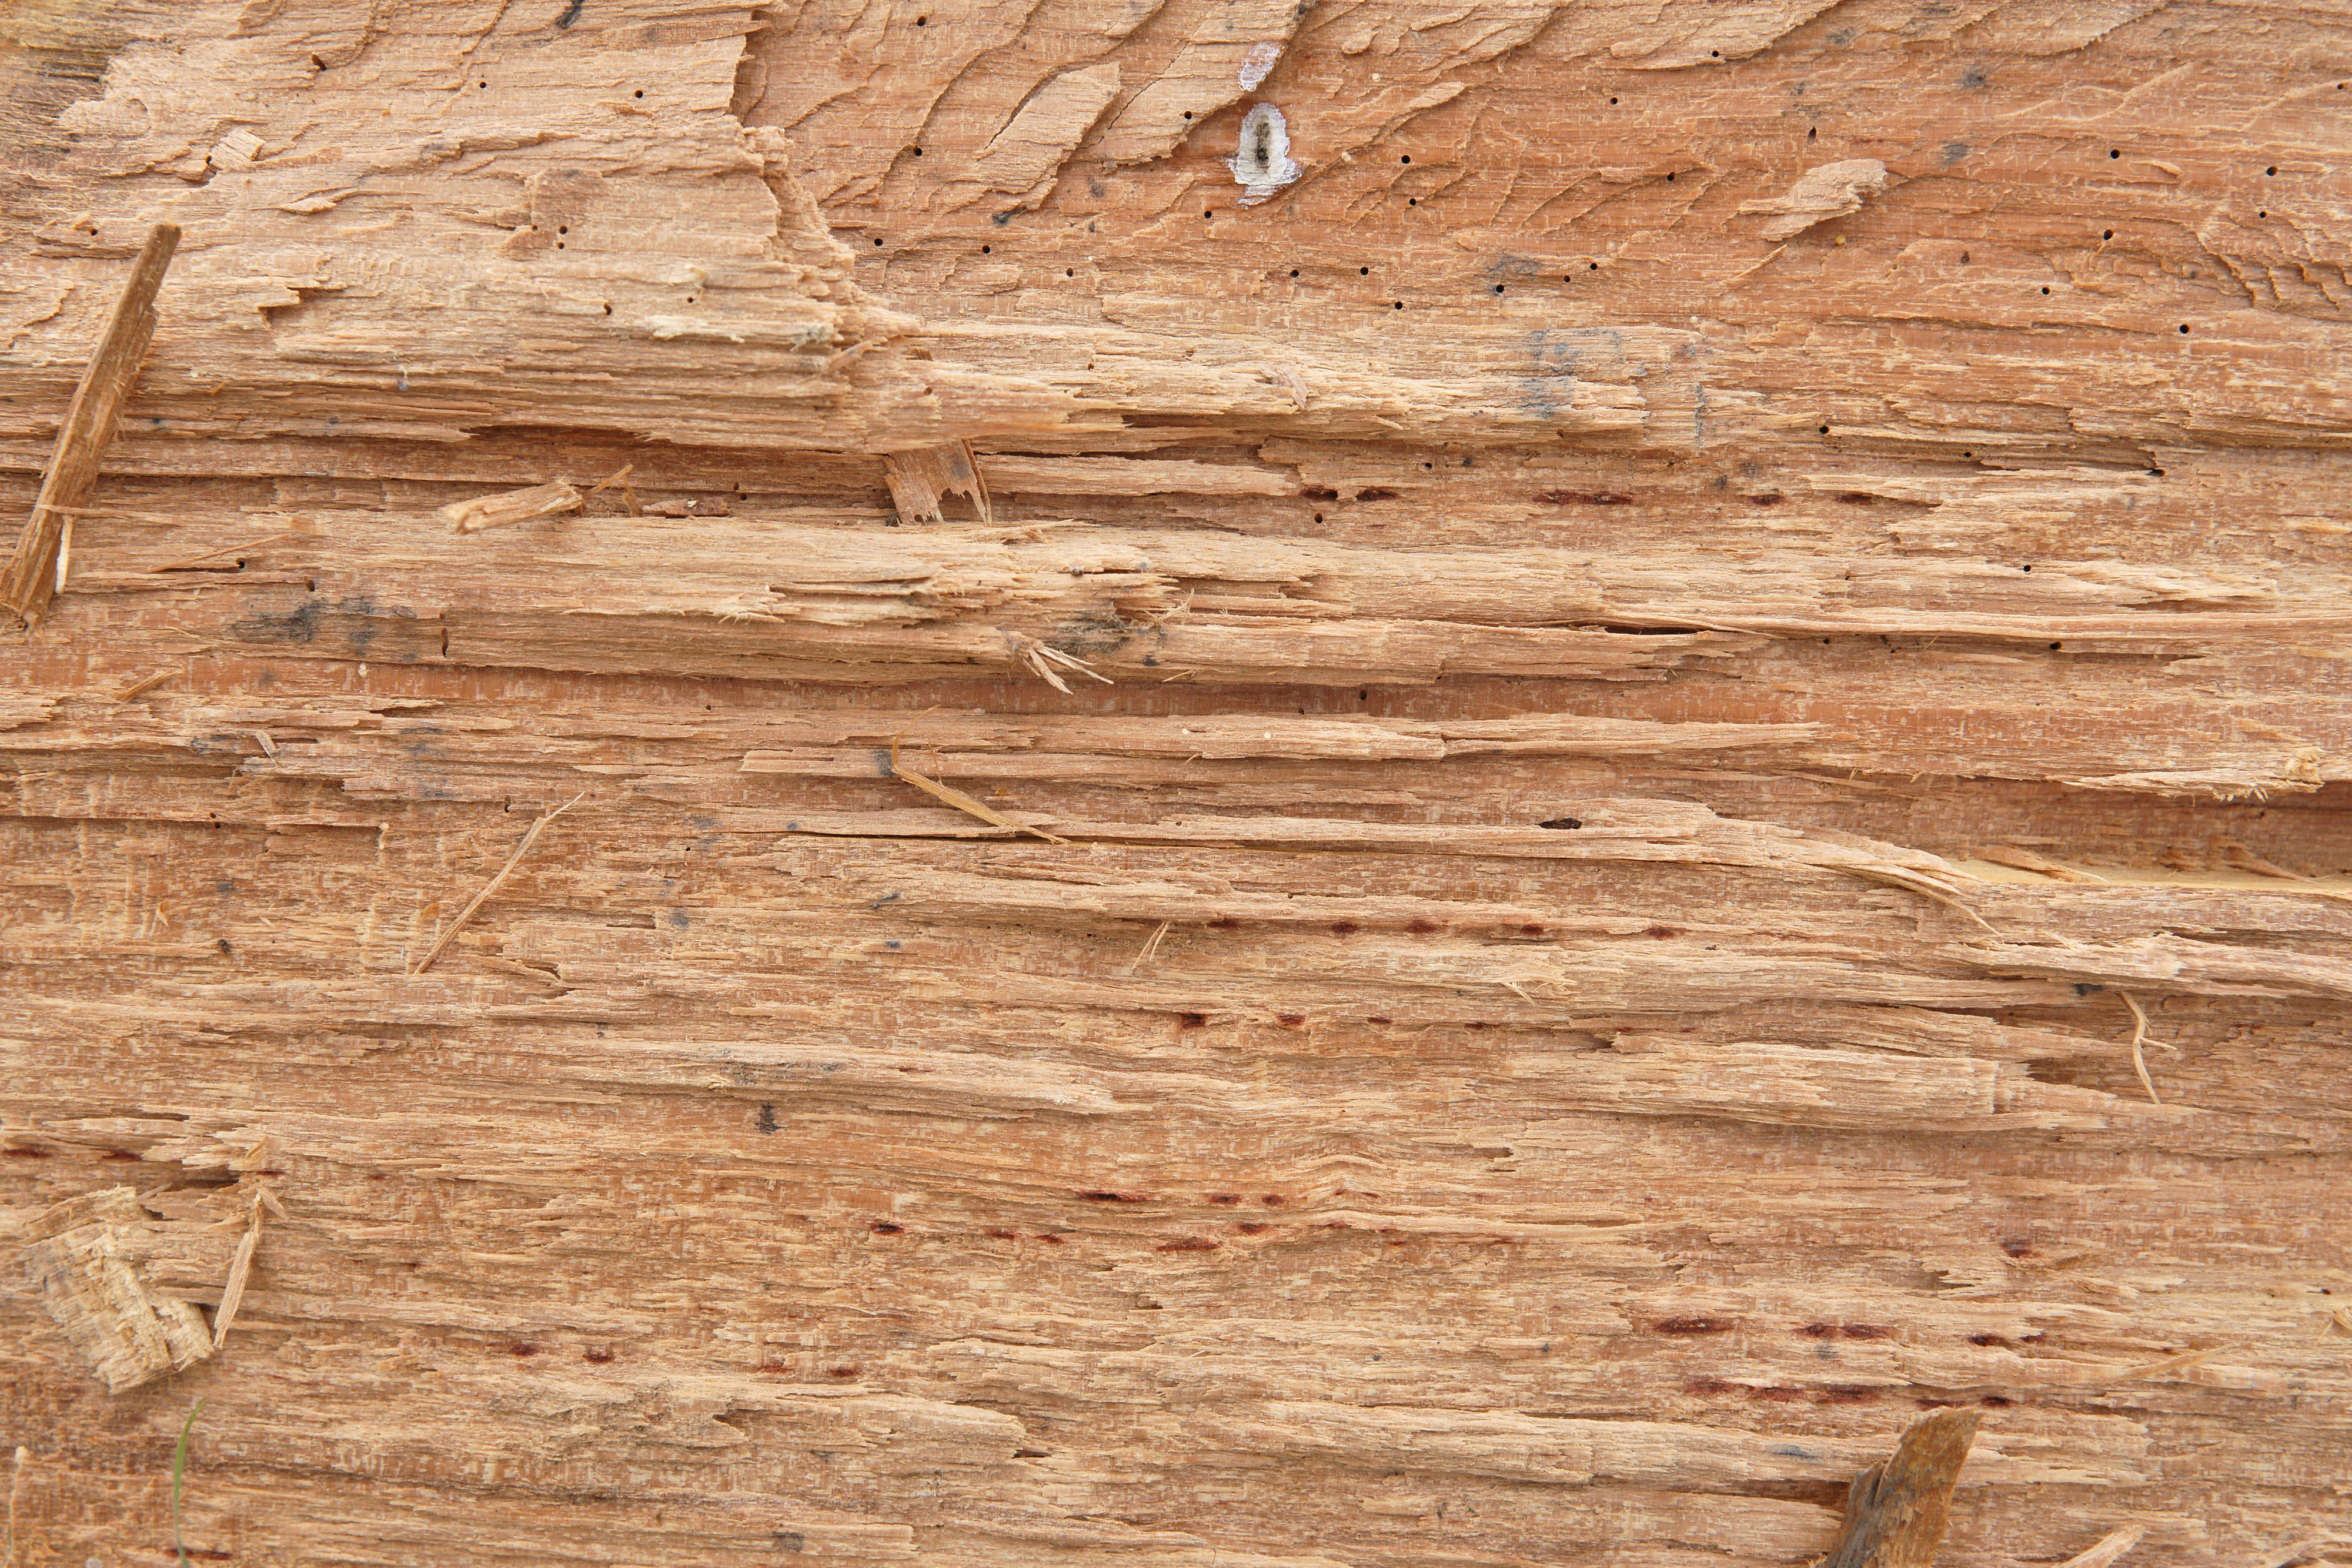 rough cut wood texture